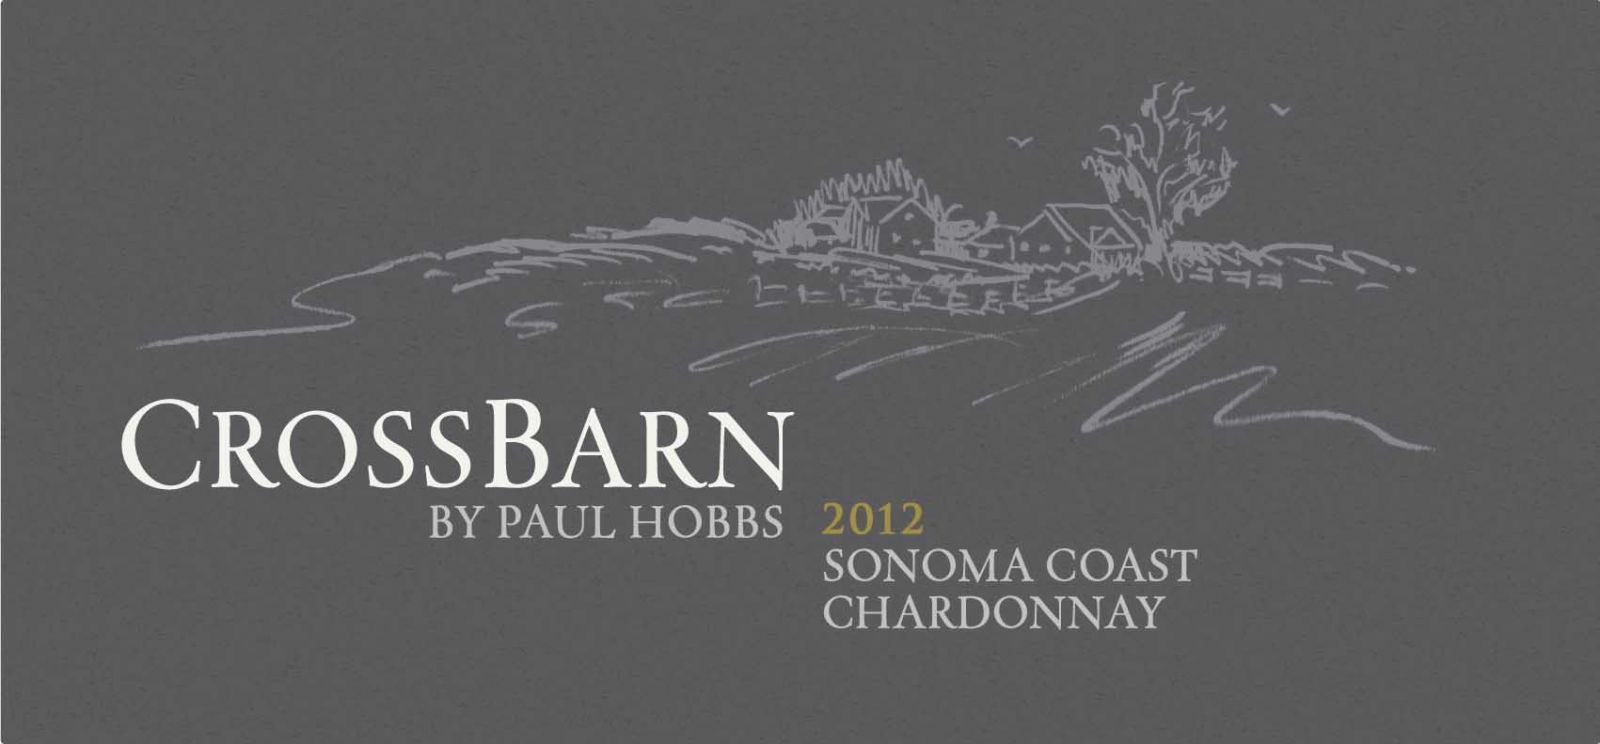 2016 Paul Hobbs Crossbarn Chardonnay Sonoma Coast image